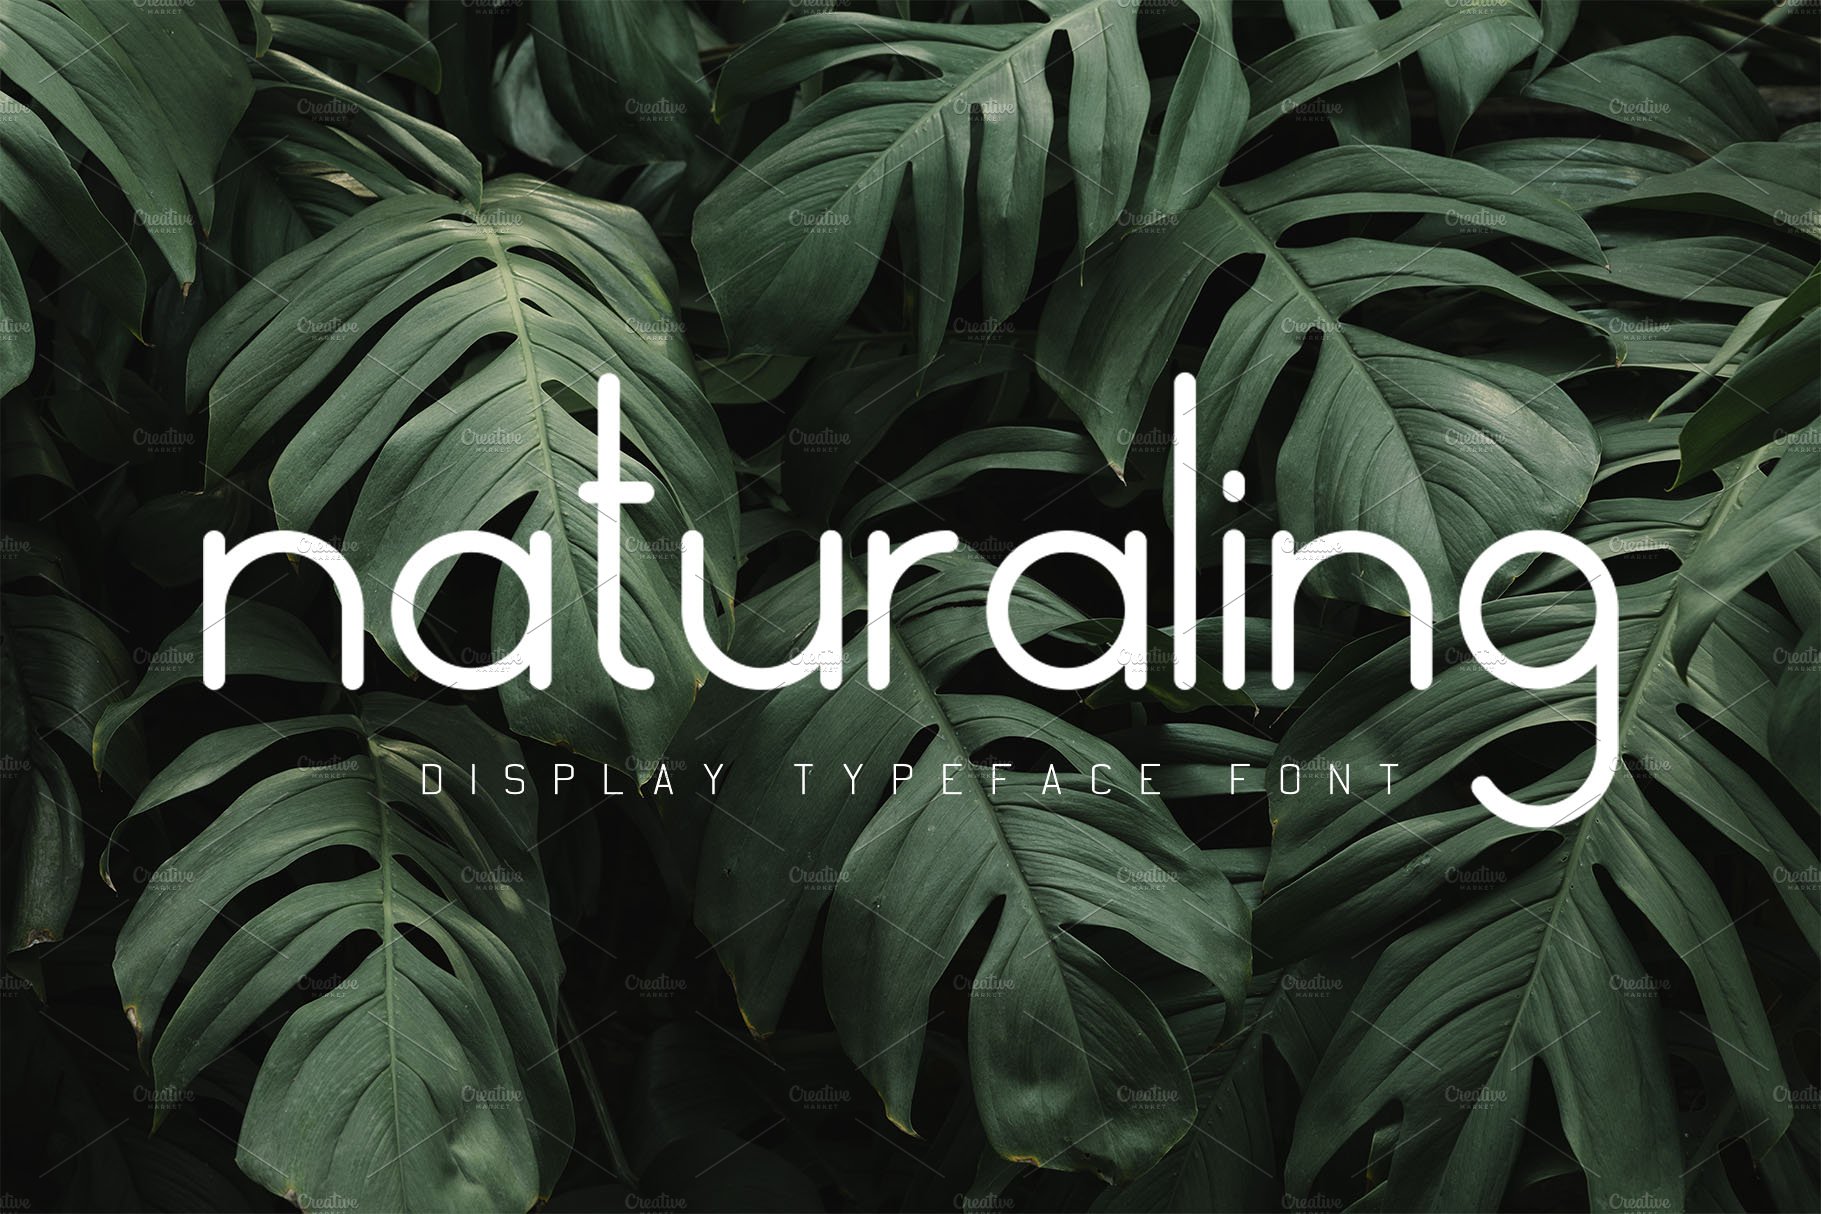 Naturaling Display Font cover image.